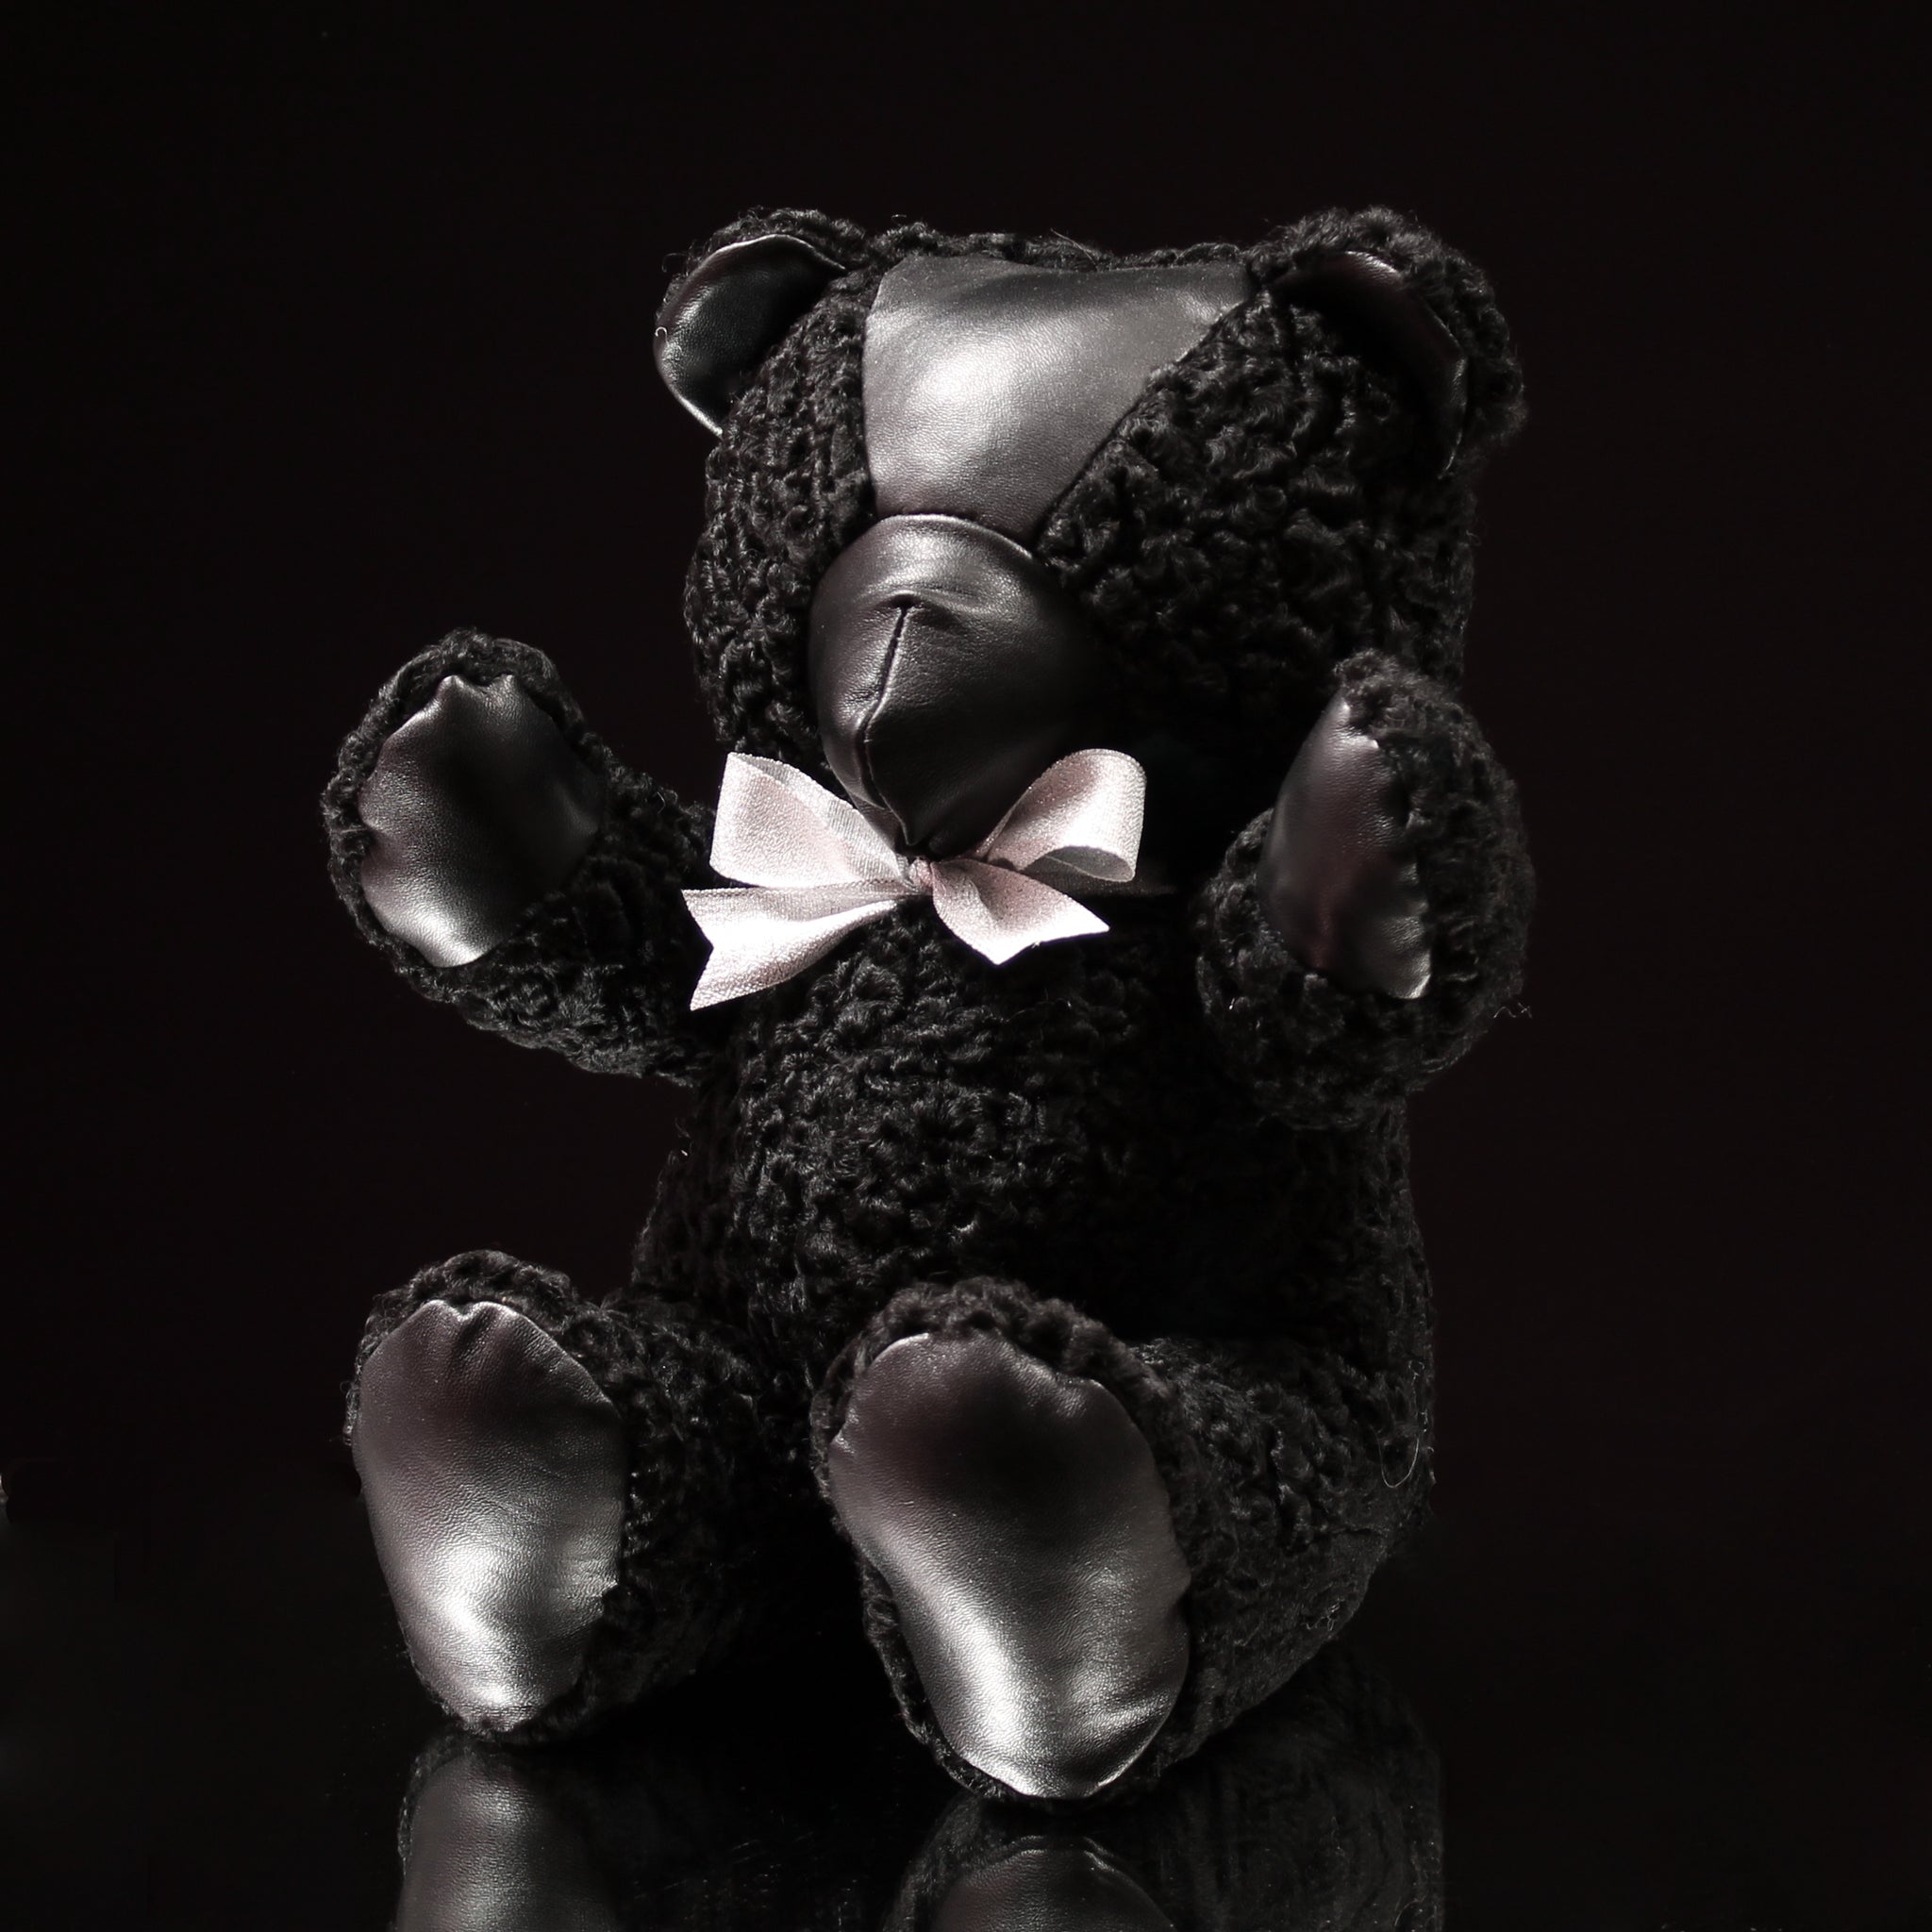 Fur Teddy Bear (12")